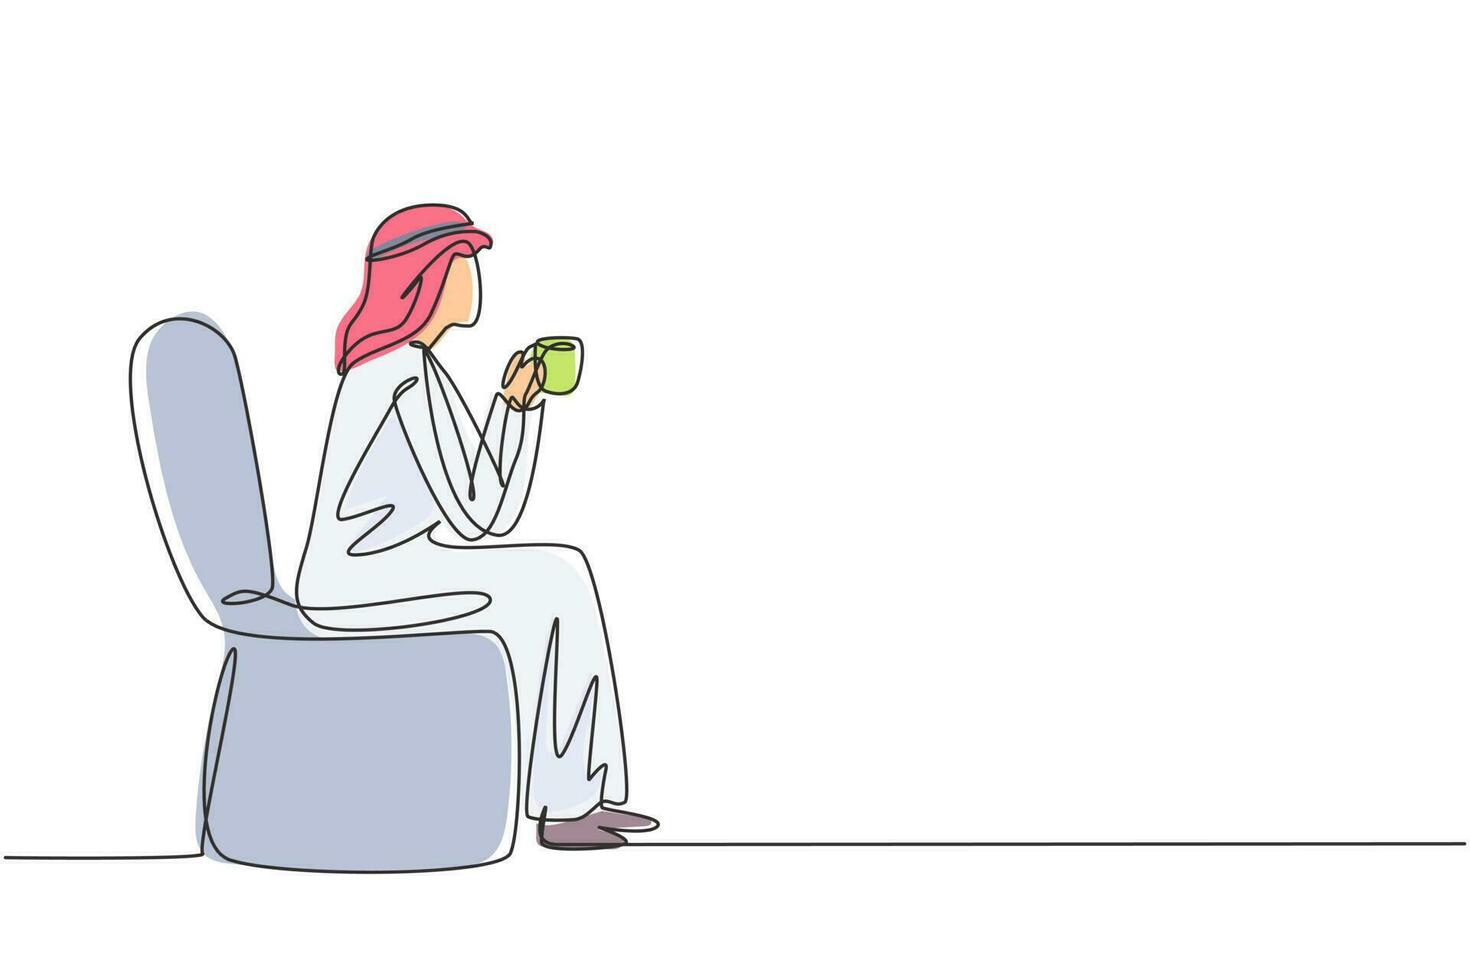 soltero continuo línea dibujo joven árabe chico sentado en moderno silla, disfrutando café en frente de ventana a acogedor hogar, lado ver concepto. dinámica uno línea dibujar gráfico diseño vector ilustración